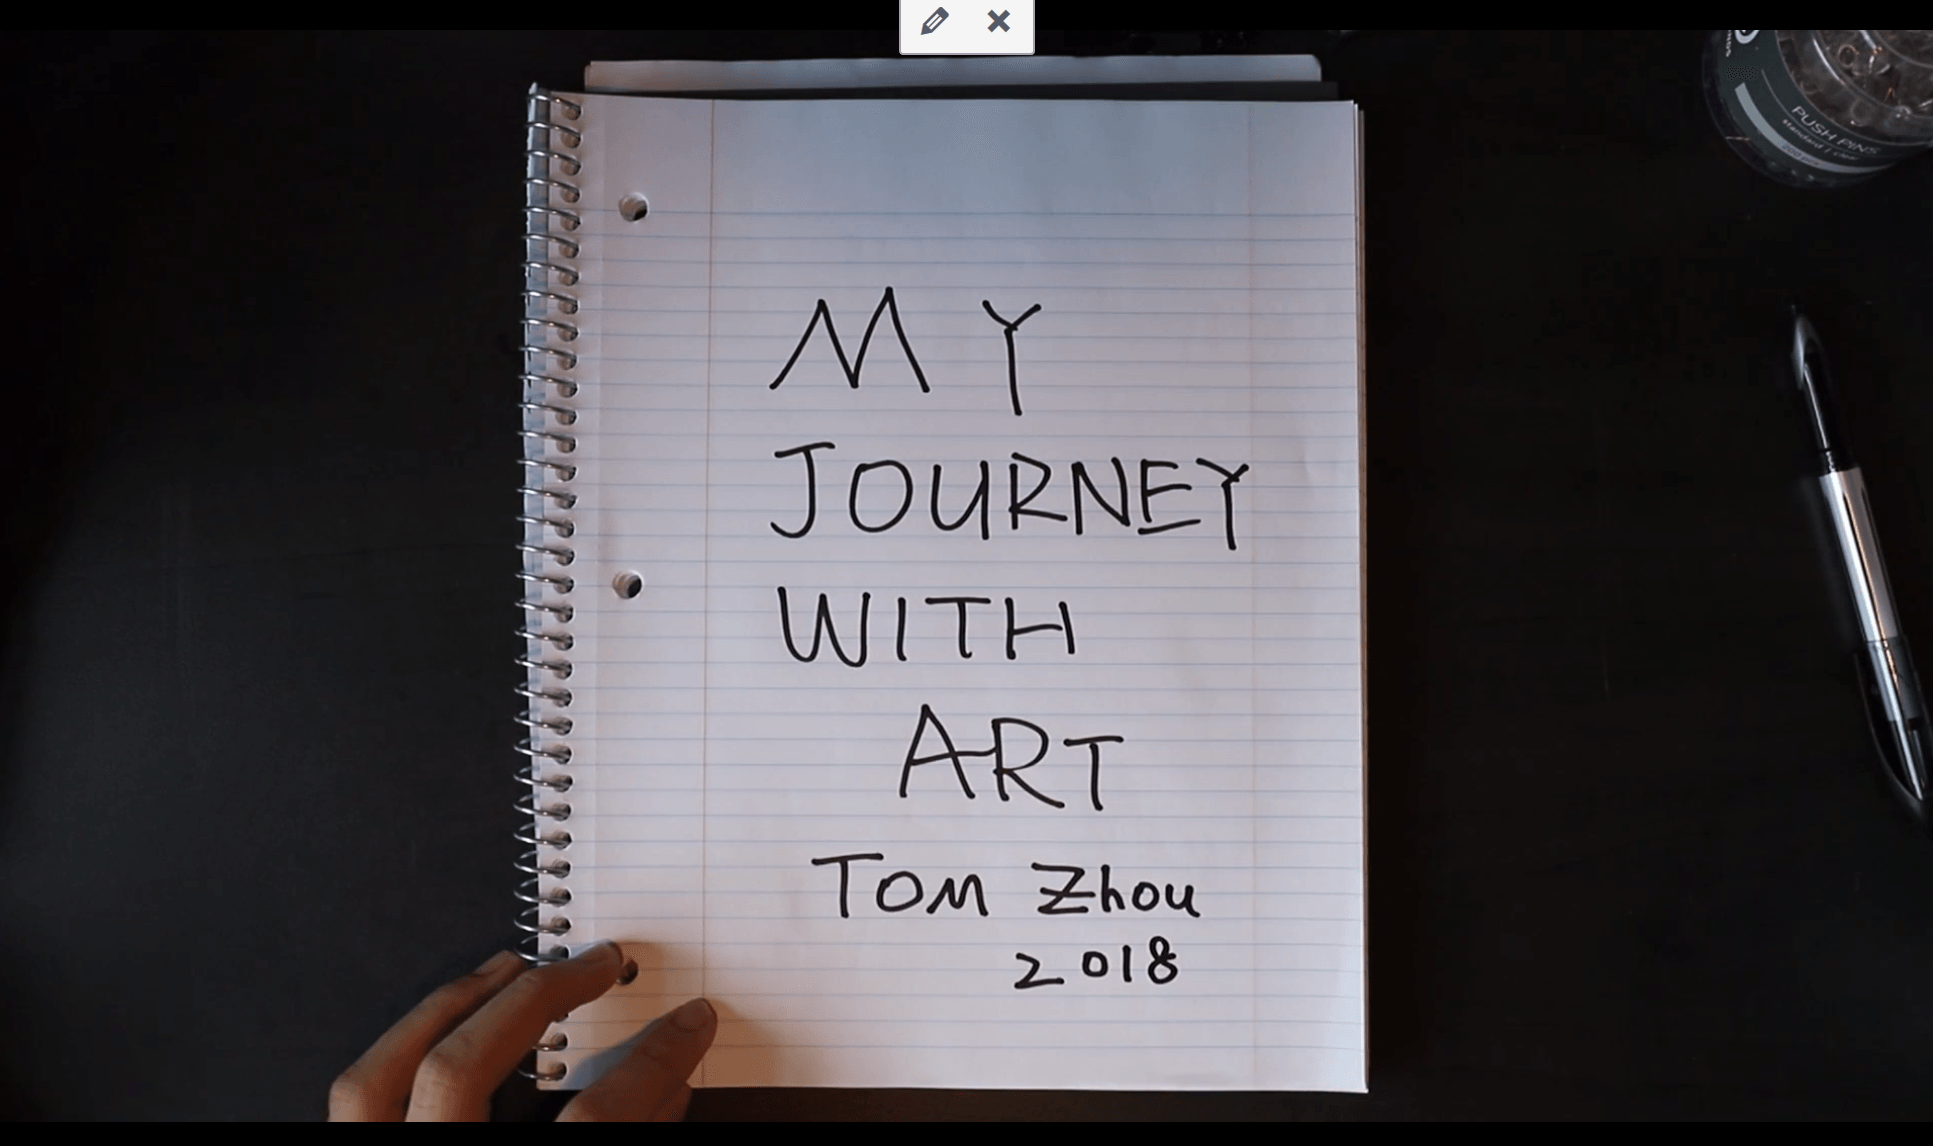 My Journey with Art